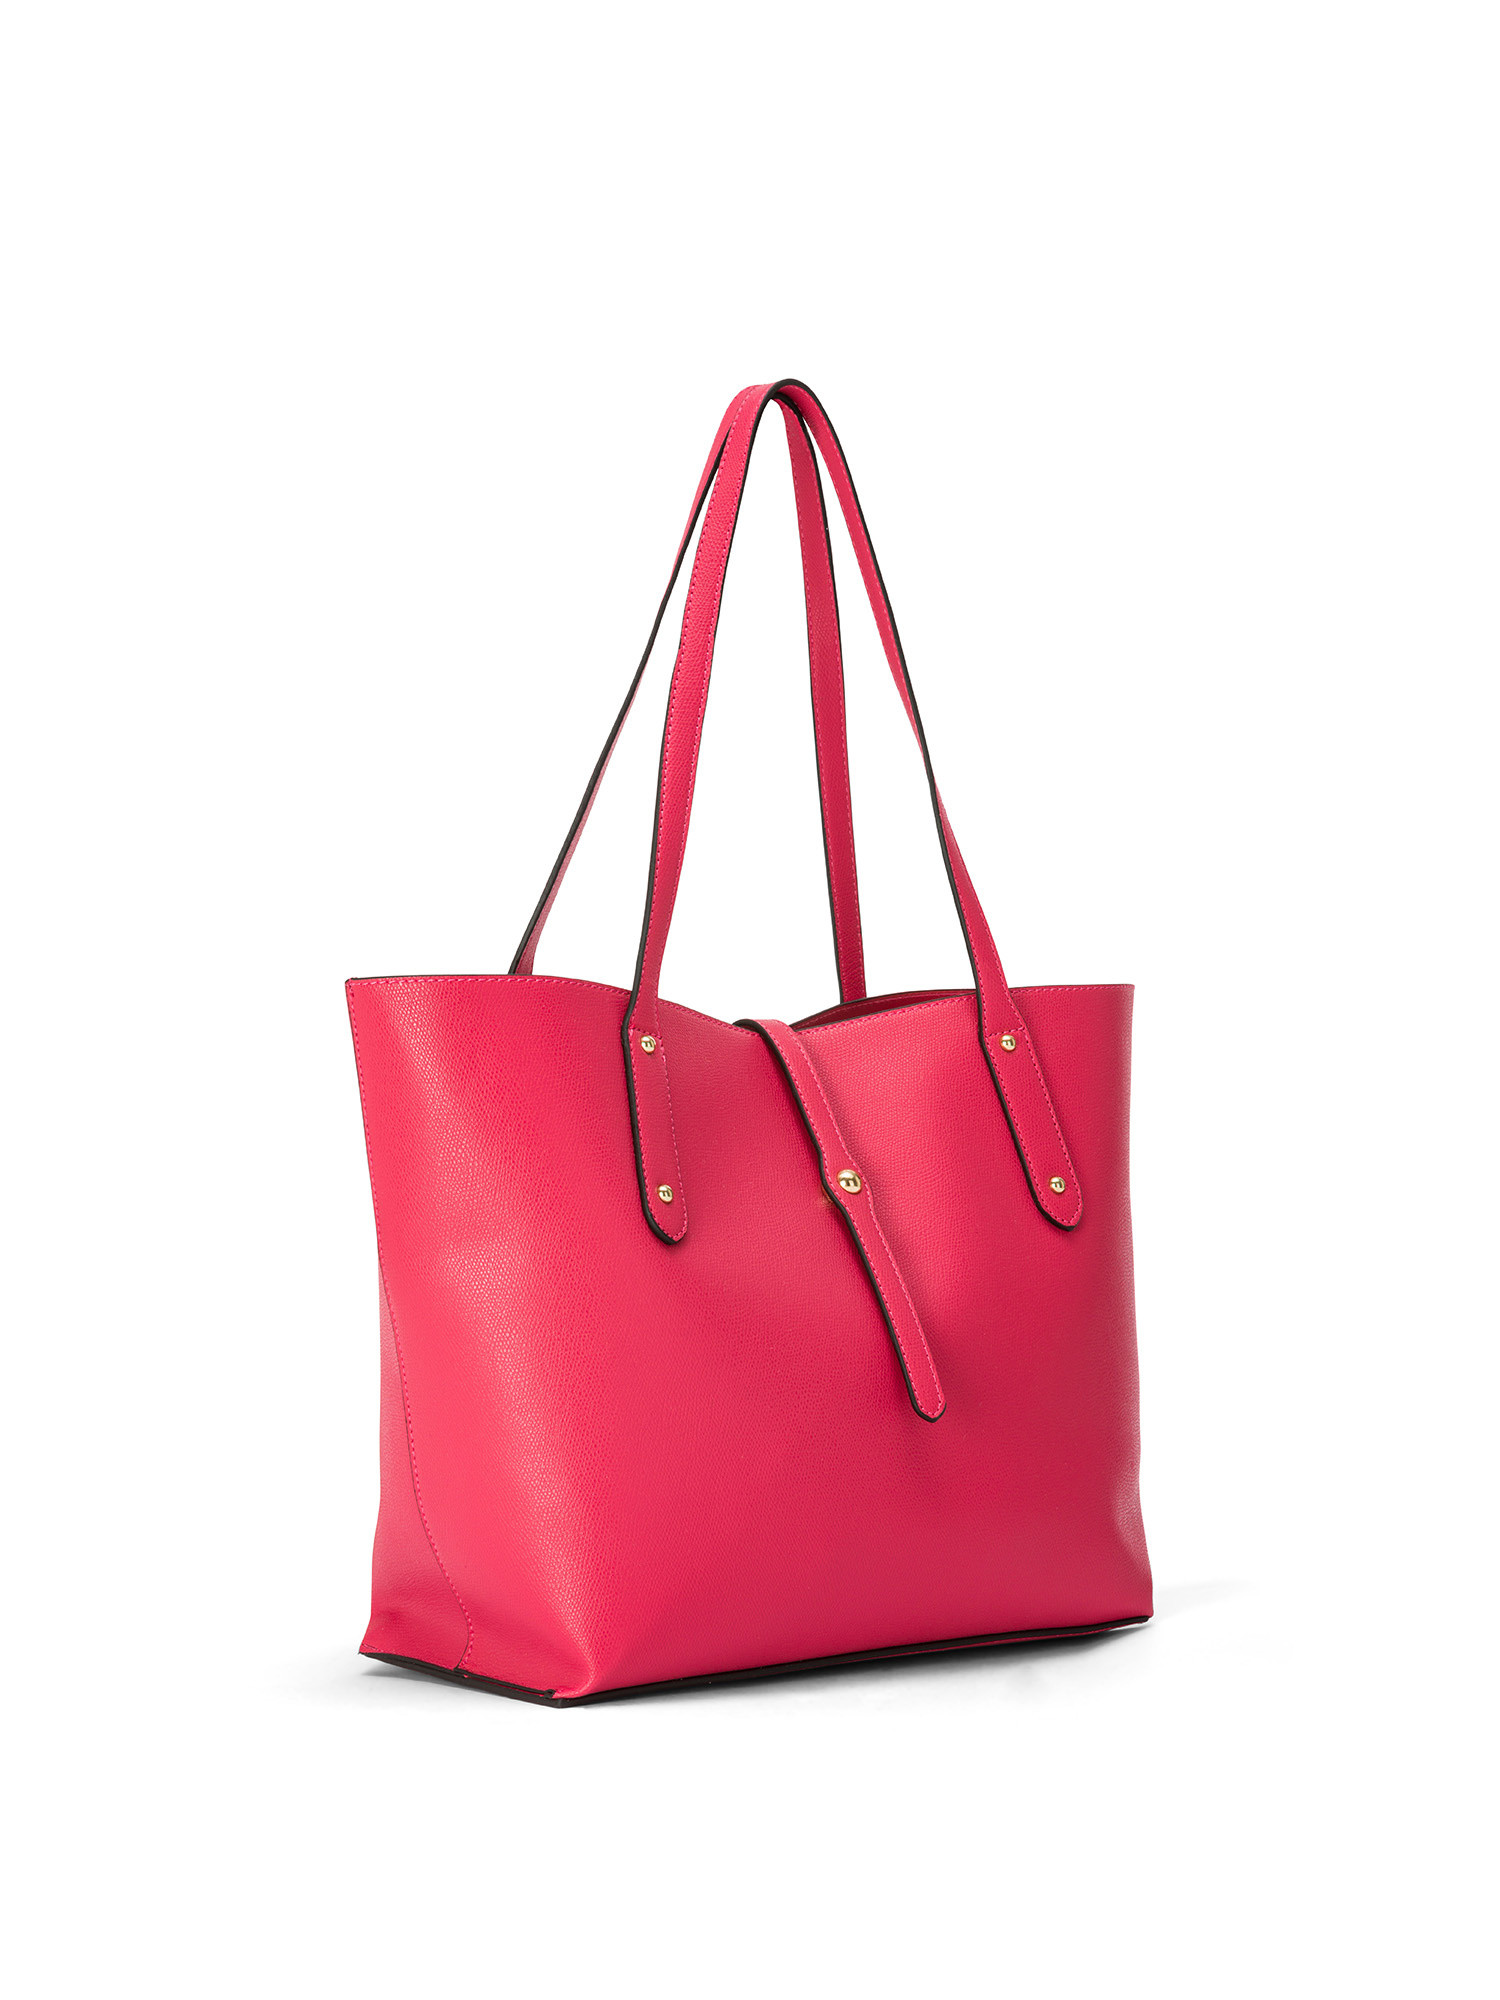 Koan - Shopping bag, Rosa fuxia, large image number 1